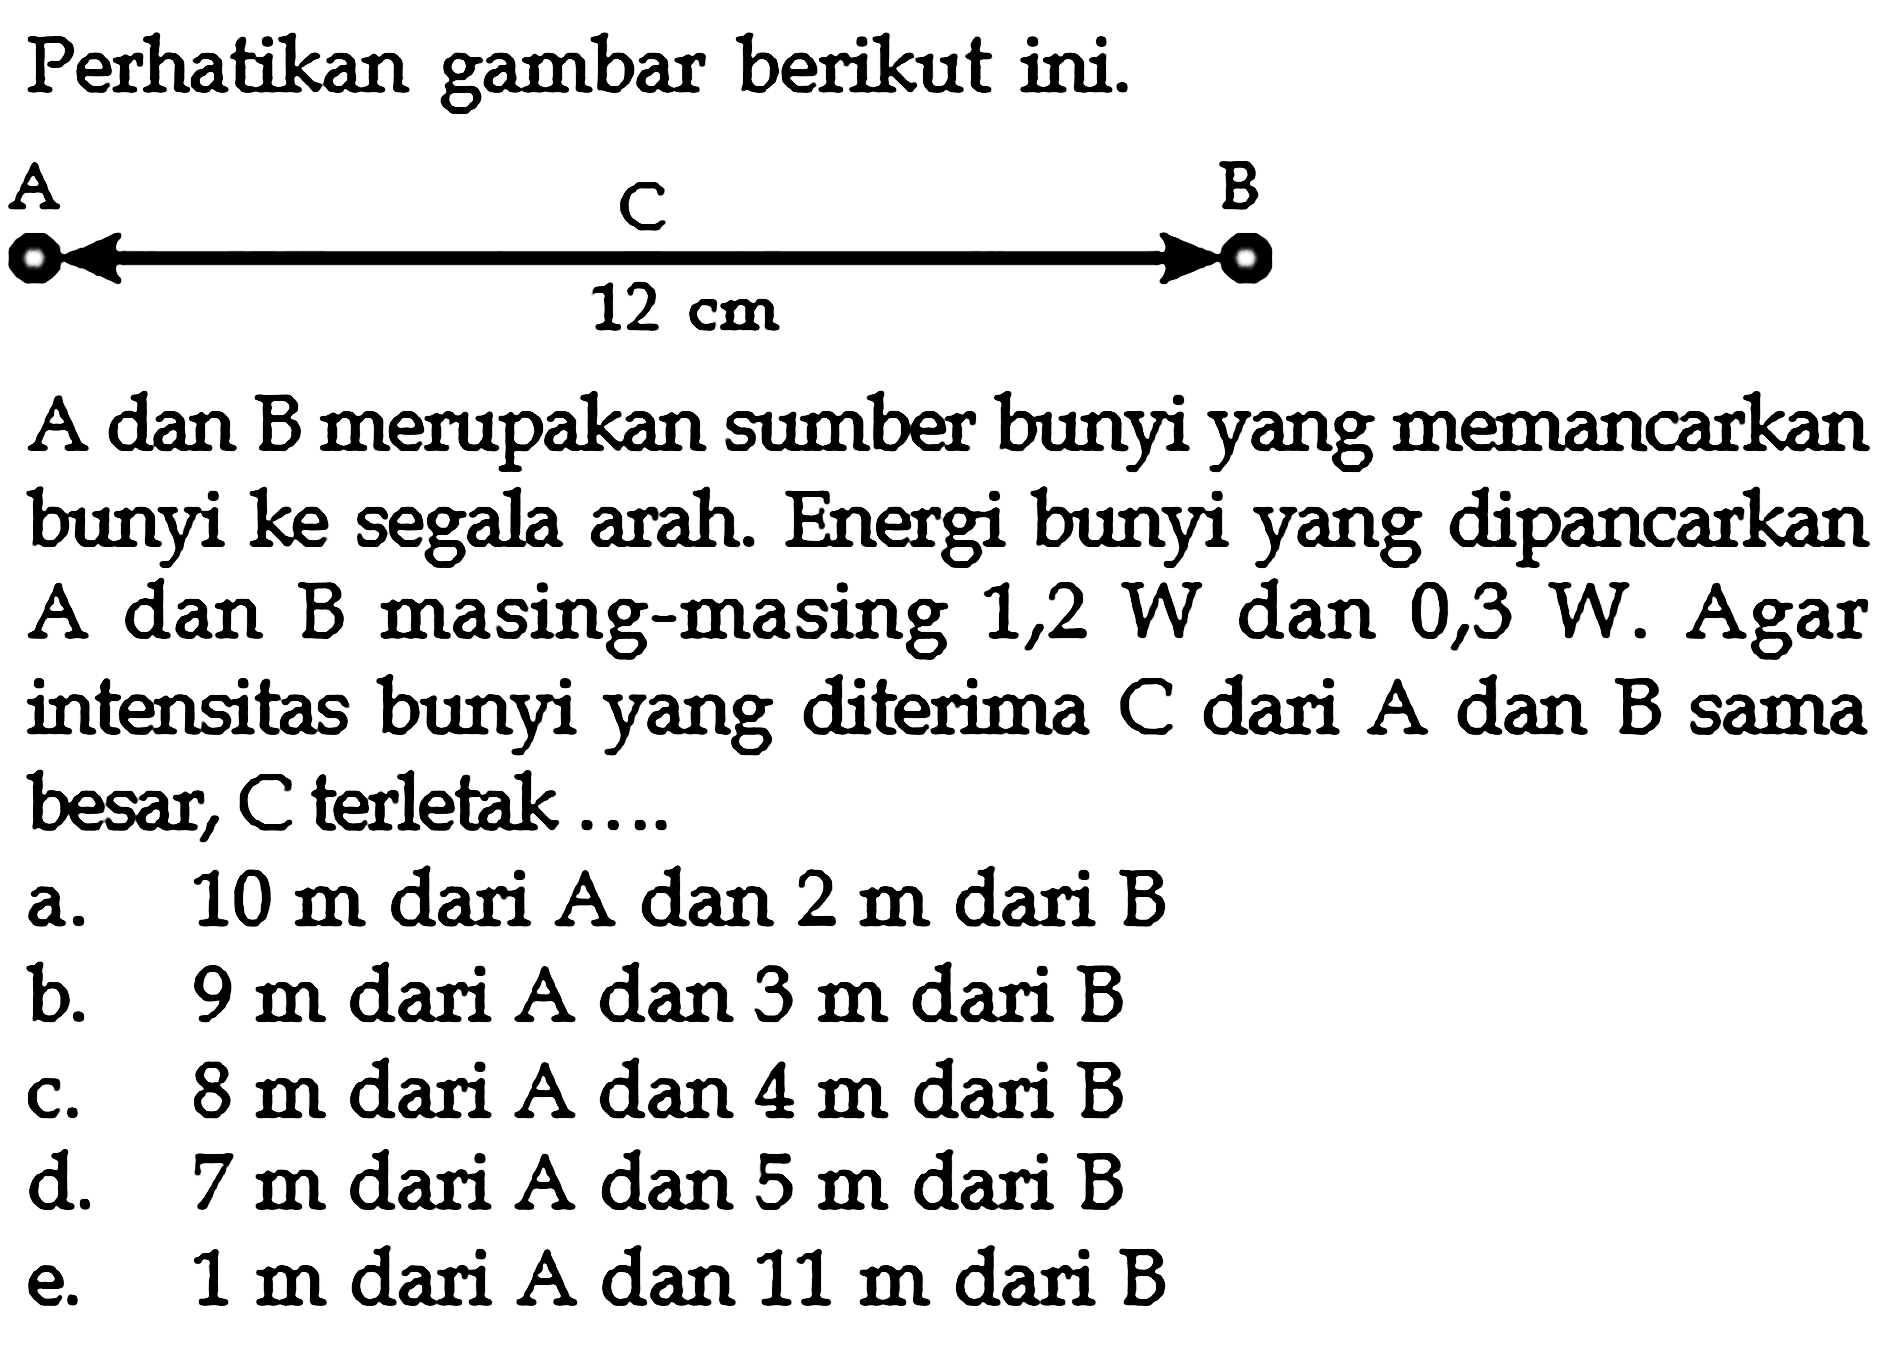 Perhatikan gambar berikut ini. A dan B merupakan sumber bunyi yang memancarkan bunyi ke segala arah. Energi bunyi yang dipancarkan A dan B masing-masing 1,2 W dan 0,3 W. Agar intensitas bunyi yang diterima C dari A dan B sama besar, C terletak.... a.  10 m  dari  A  dan  2 m  dari  B b.  9 m  dari A dan 3 m dari B c. 8 m dari A dan 4 m dari  B d. 7 m dari A dan  5 m  dari B e.  1 m dari A dan 11 m dari B 